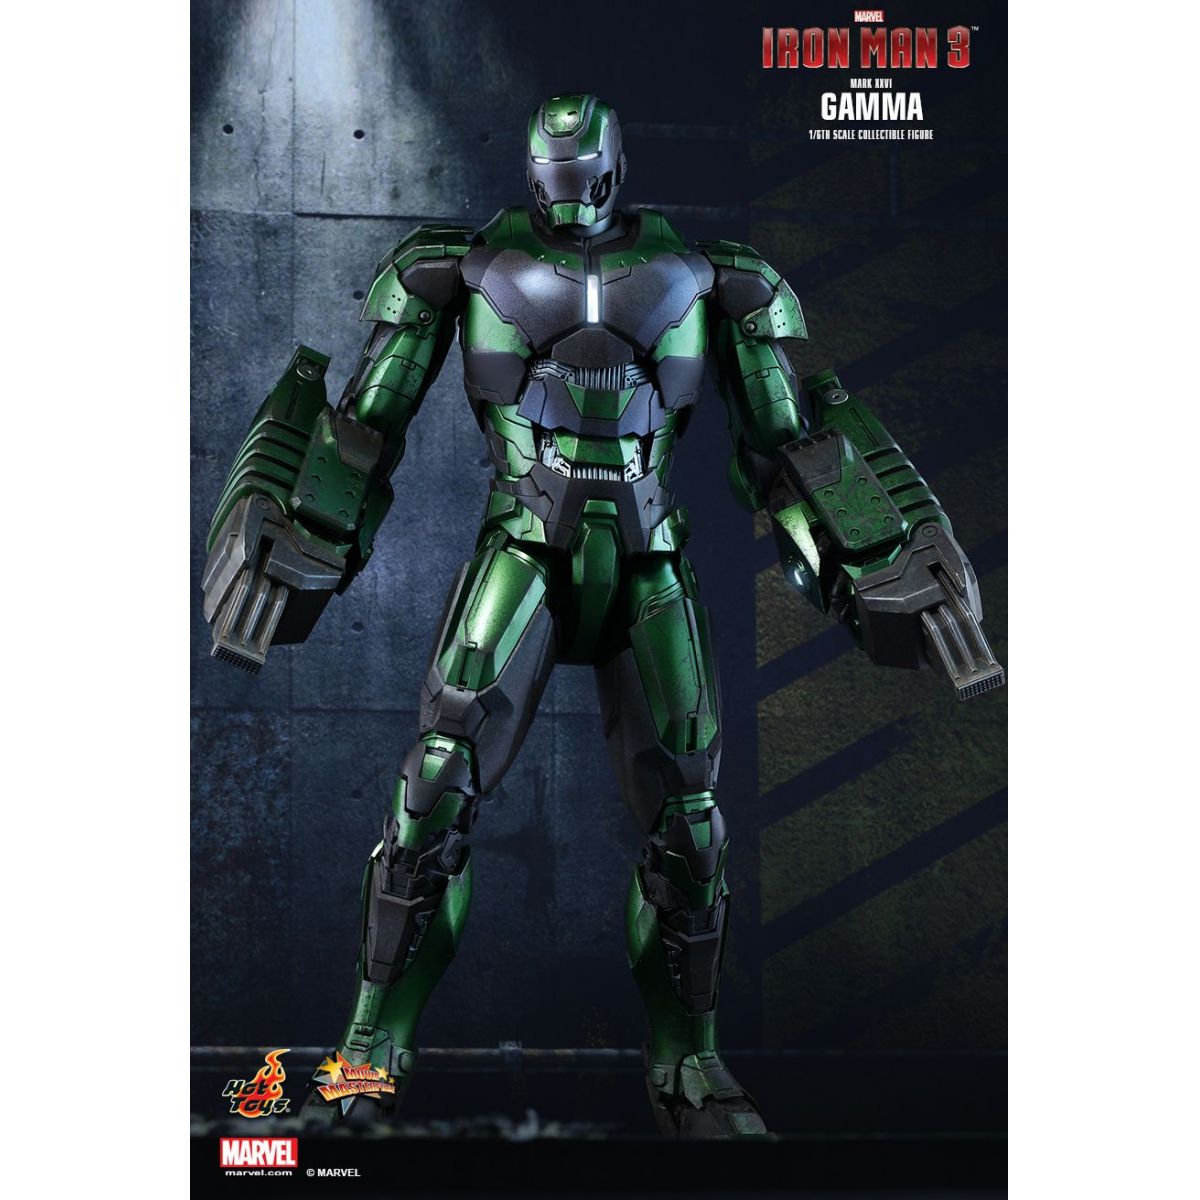 Boneco Iron Man Mark XXVI Gamma: Homem de Ferro 3 (Iron Man 3) Exclusive Escala 1/6 - Hot Toys